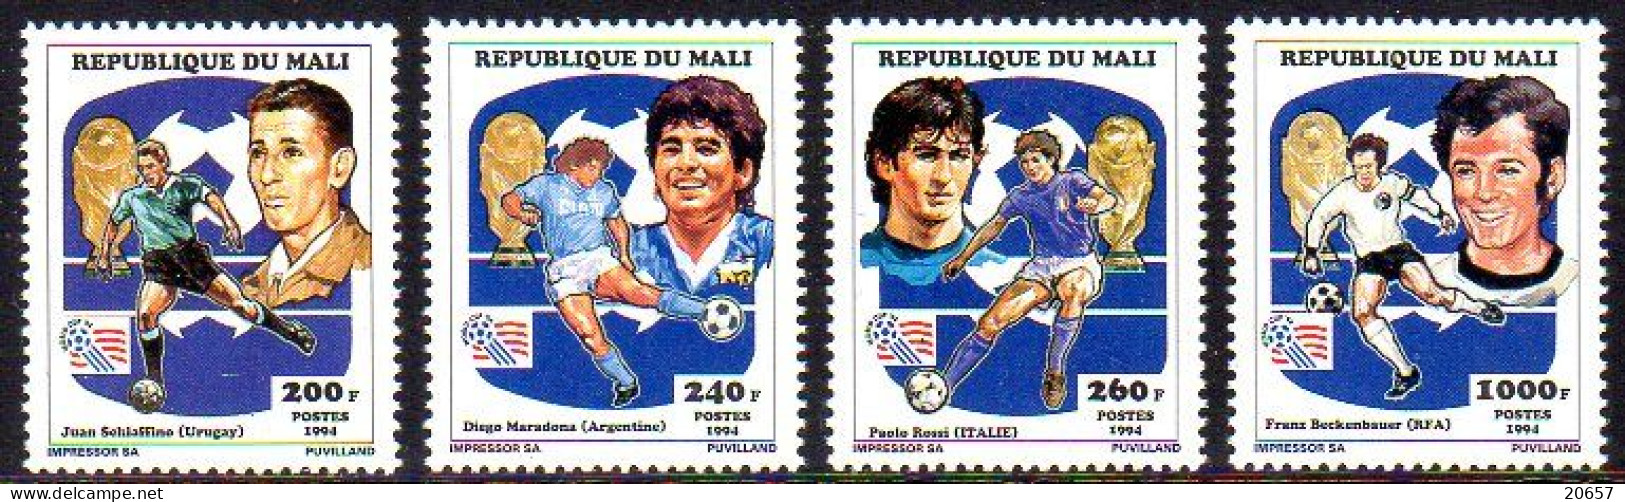 Mali 0602/05 Mondial Football USA 94, Joueurs Uruguay, Argentina, Italia, Germany - 1994 – USA